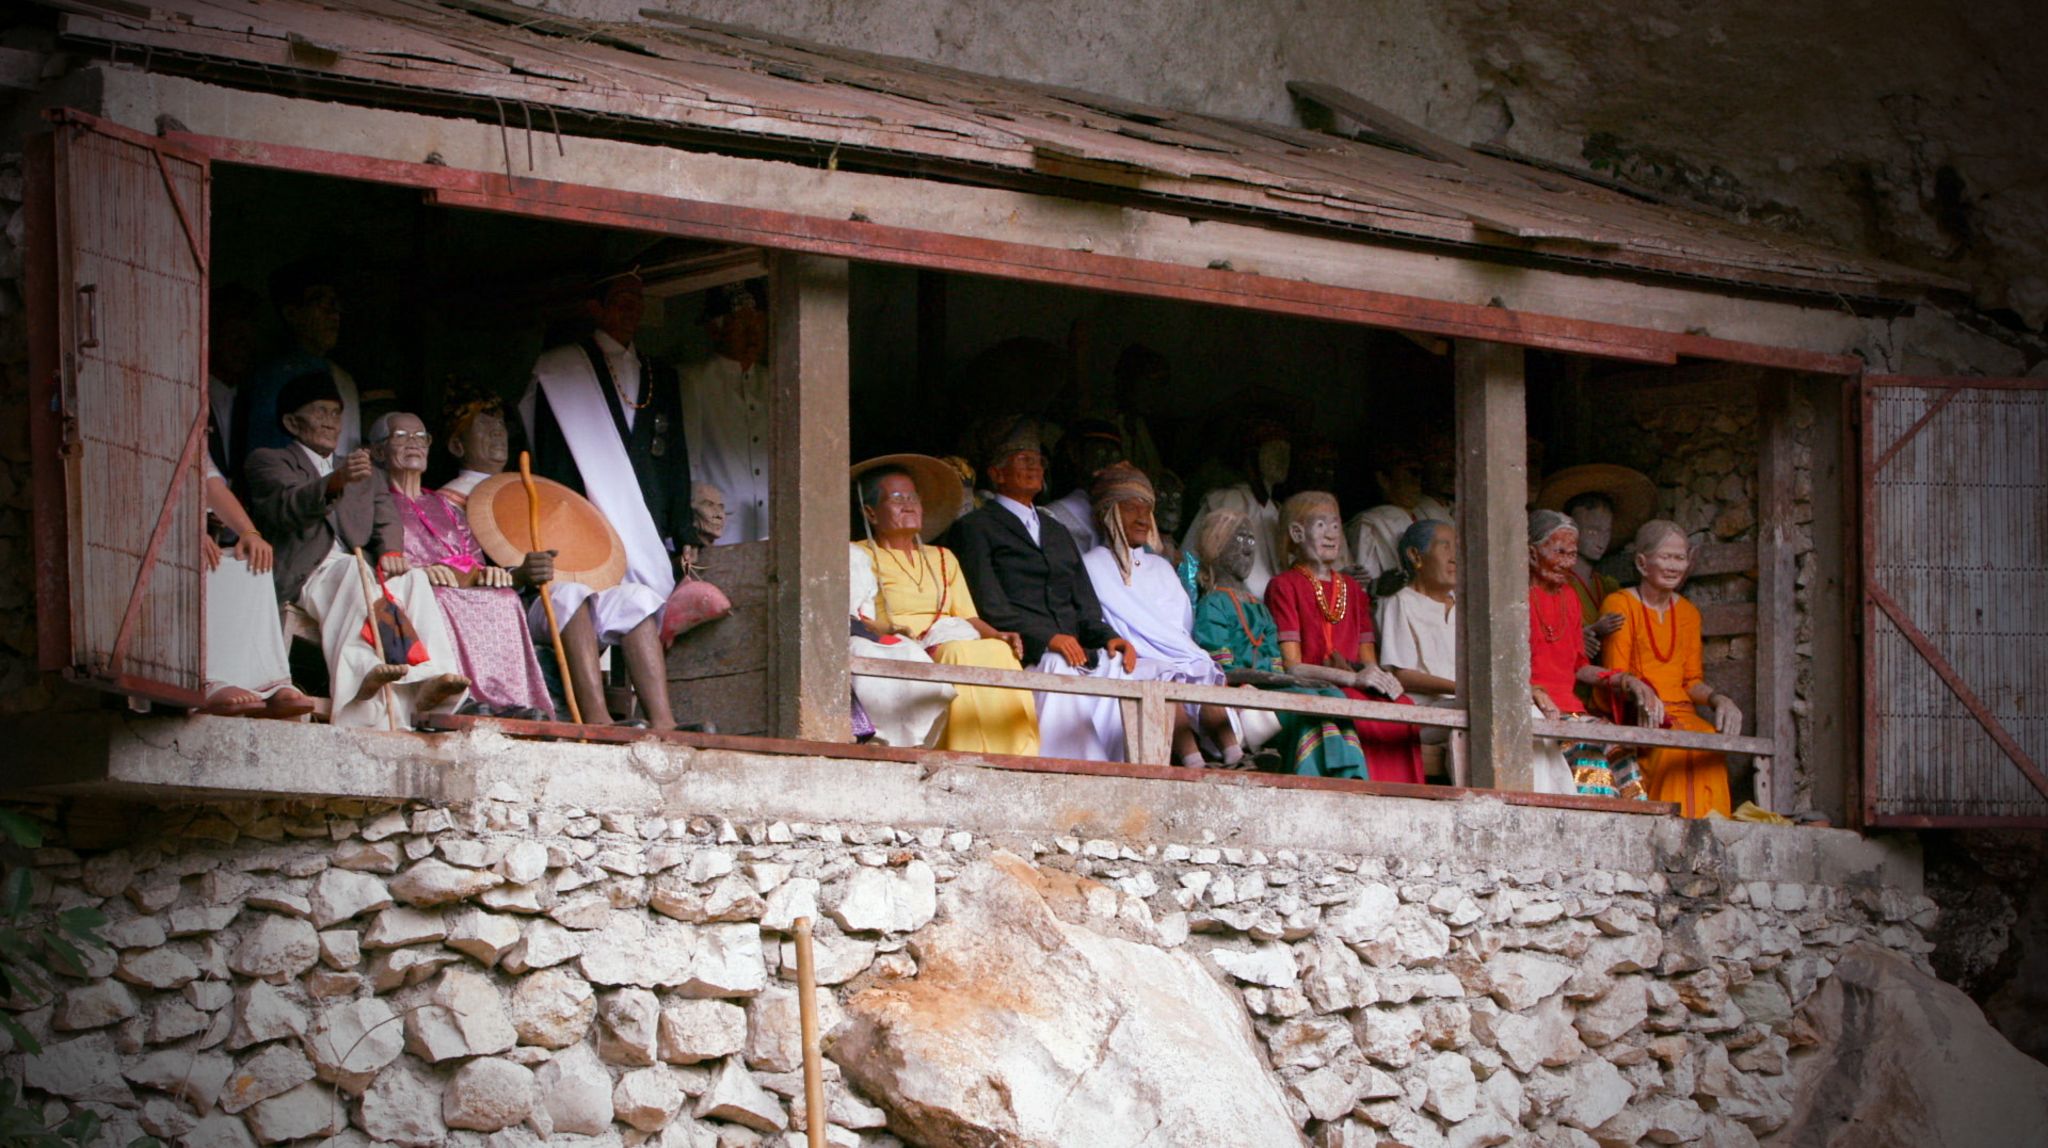 Balcony on the traditional burial site of Londa, Rantepao, Tana Toraja